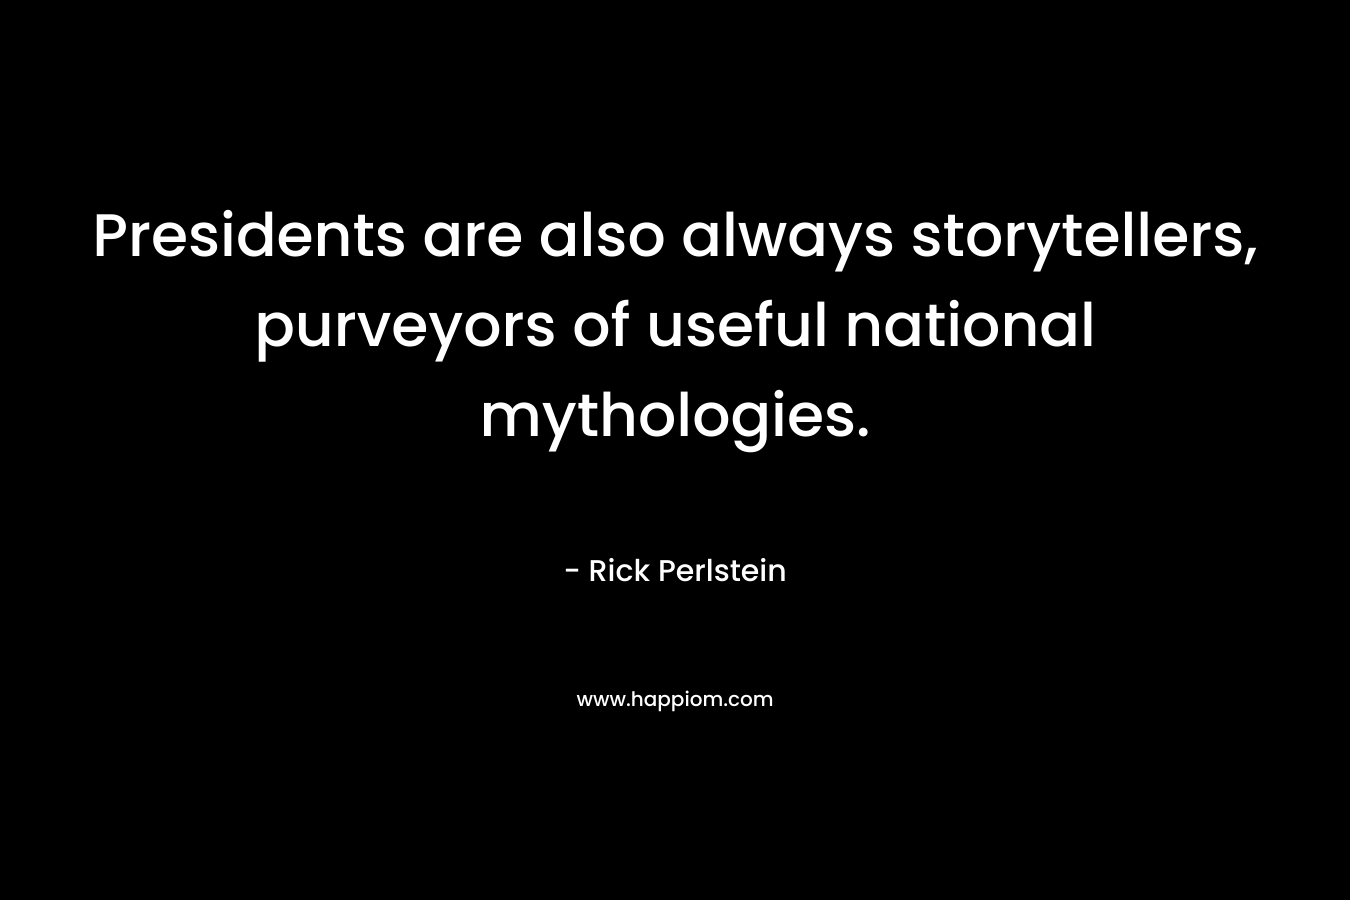 Presidents are also always storytellers, purveyors of useful national mythologies.